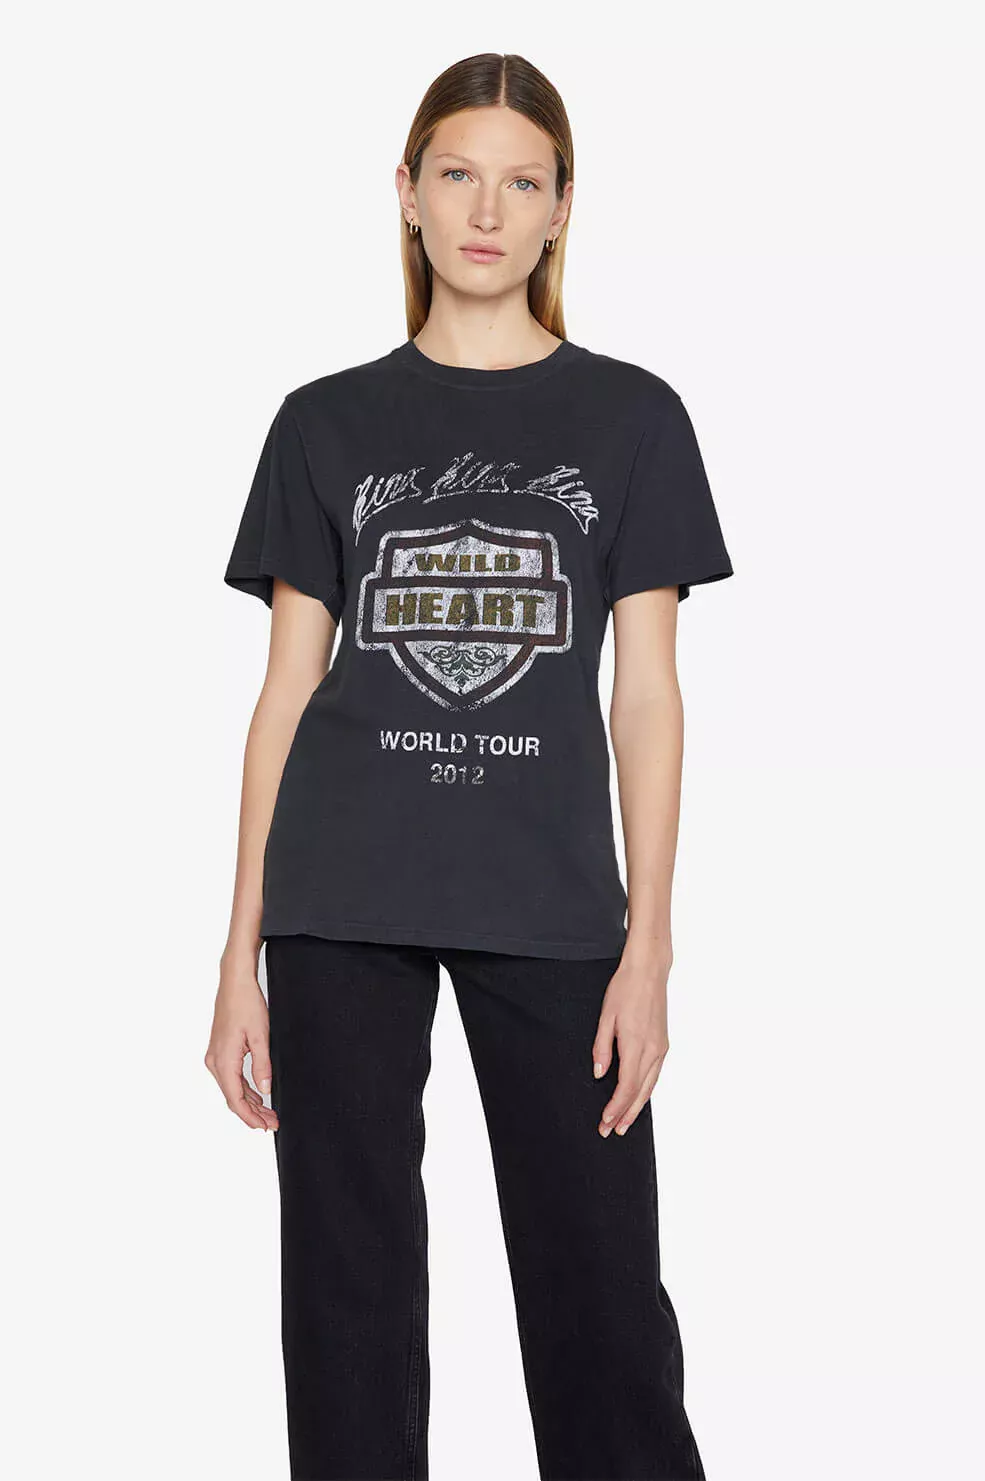 Louis Vuitton Women's T-Shirt - Inktee Store